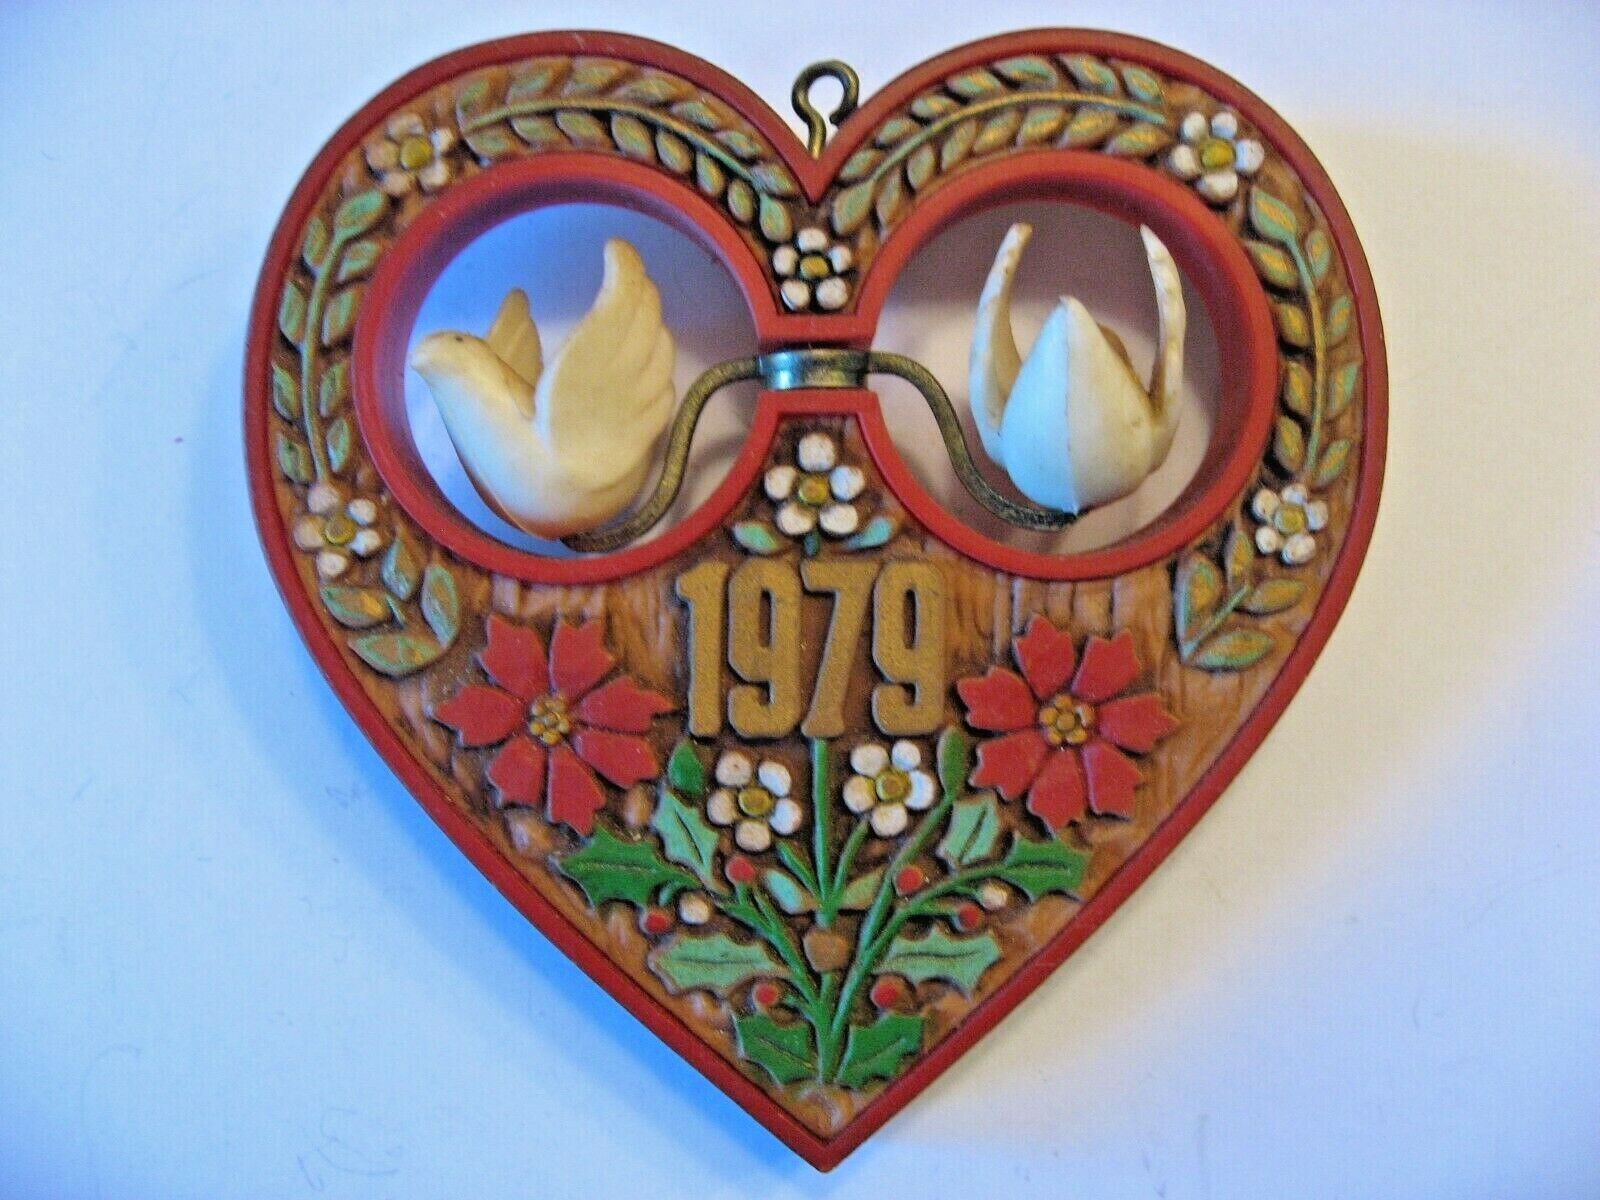 Vintage Hallmark 1979 Annual Heart with Rotating Doves Christmas Ornament